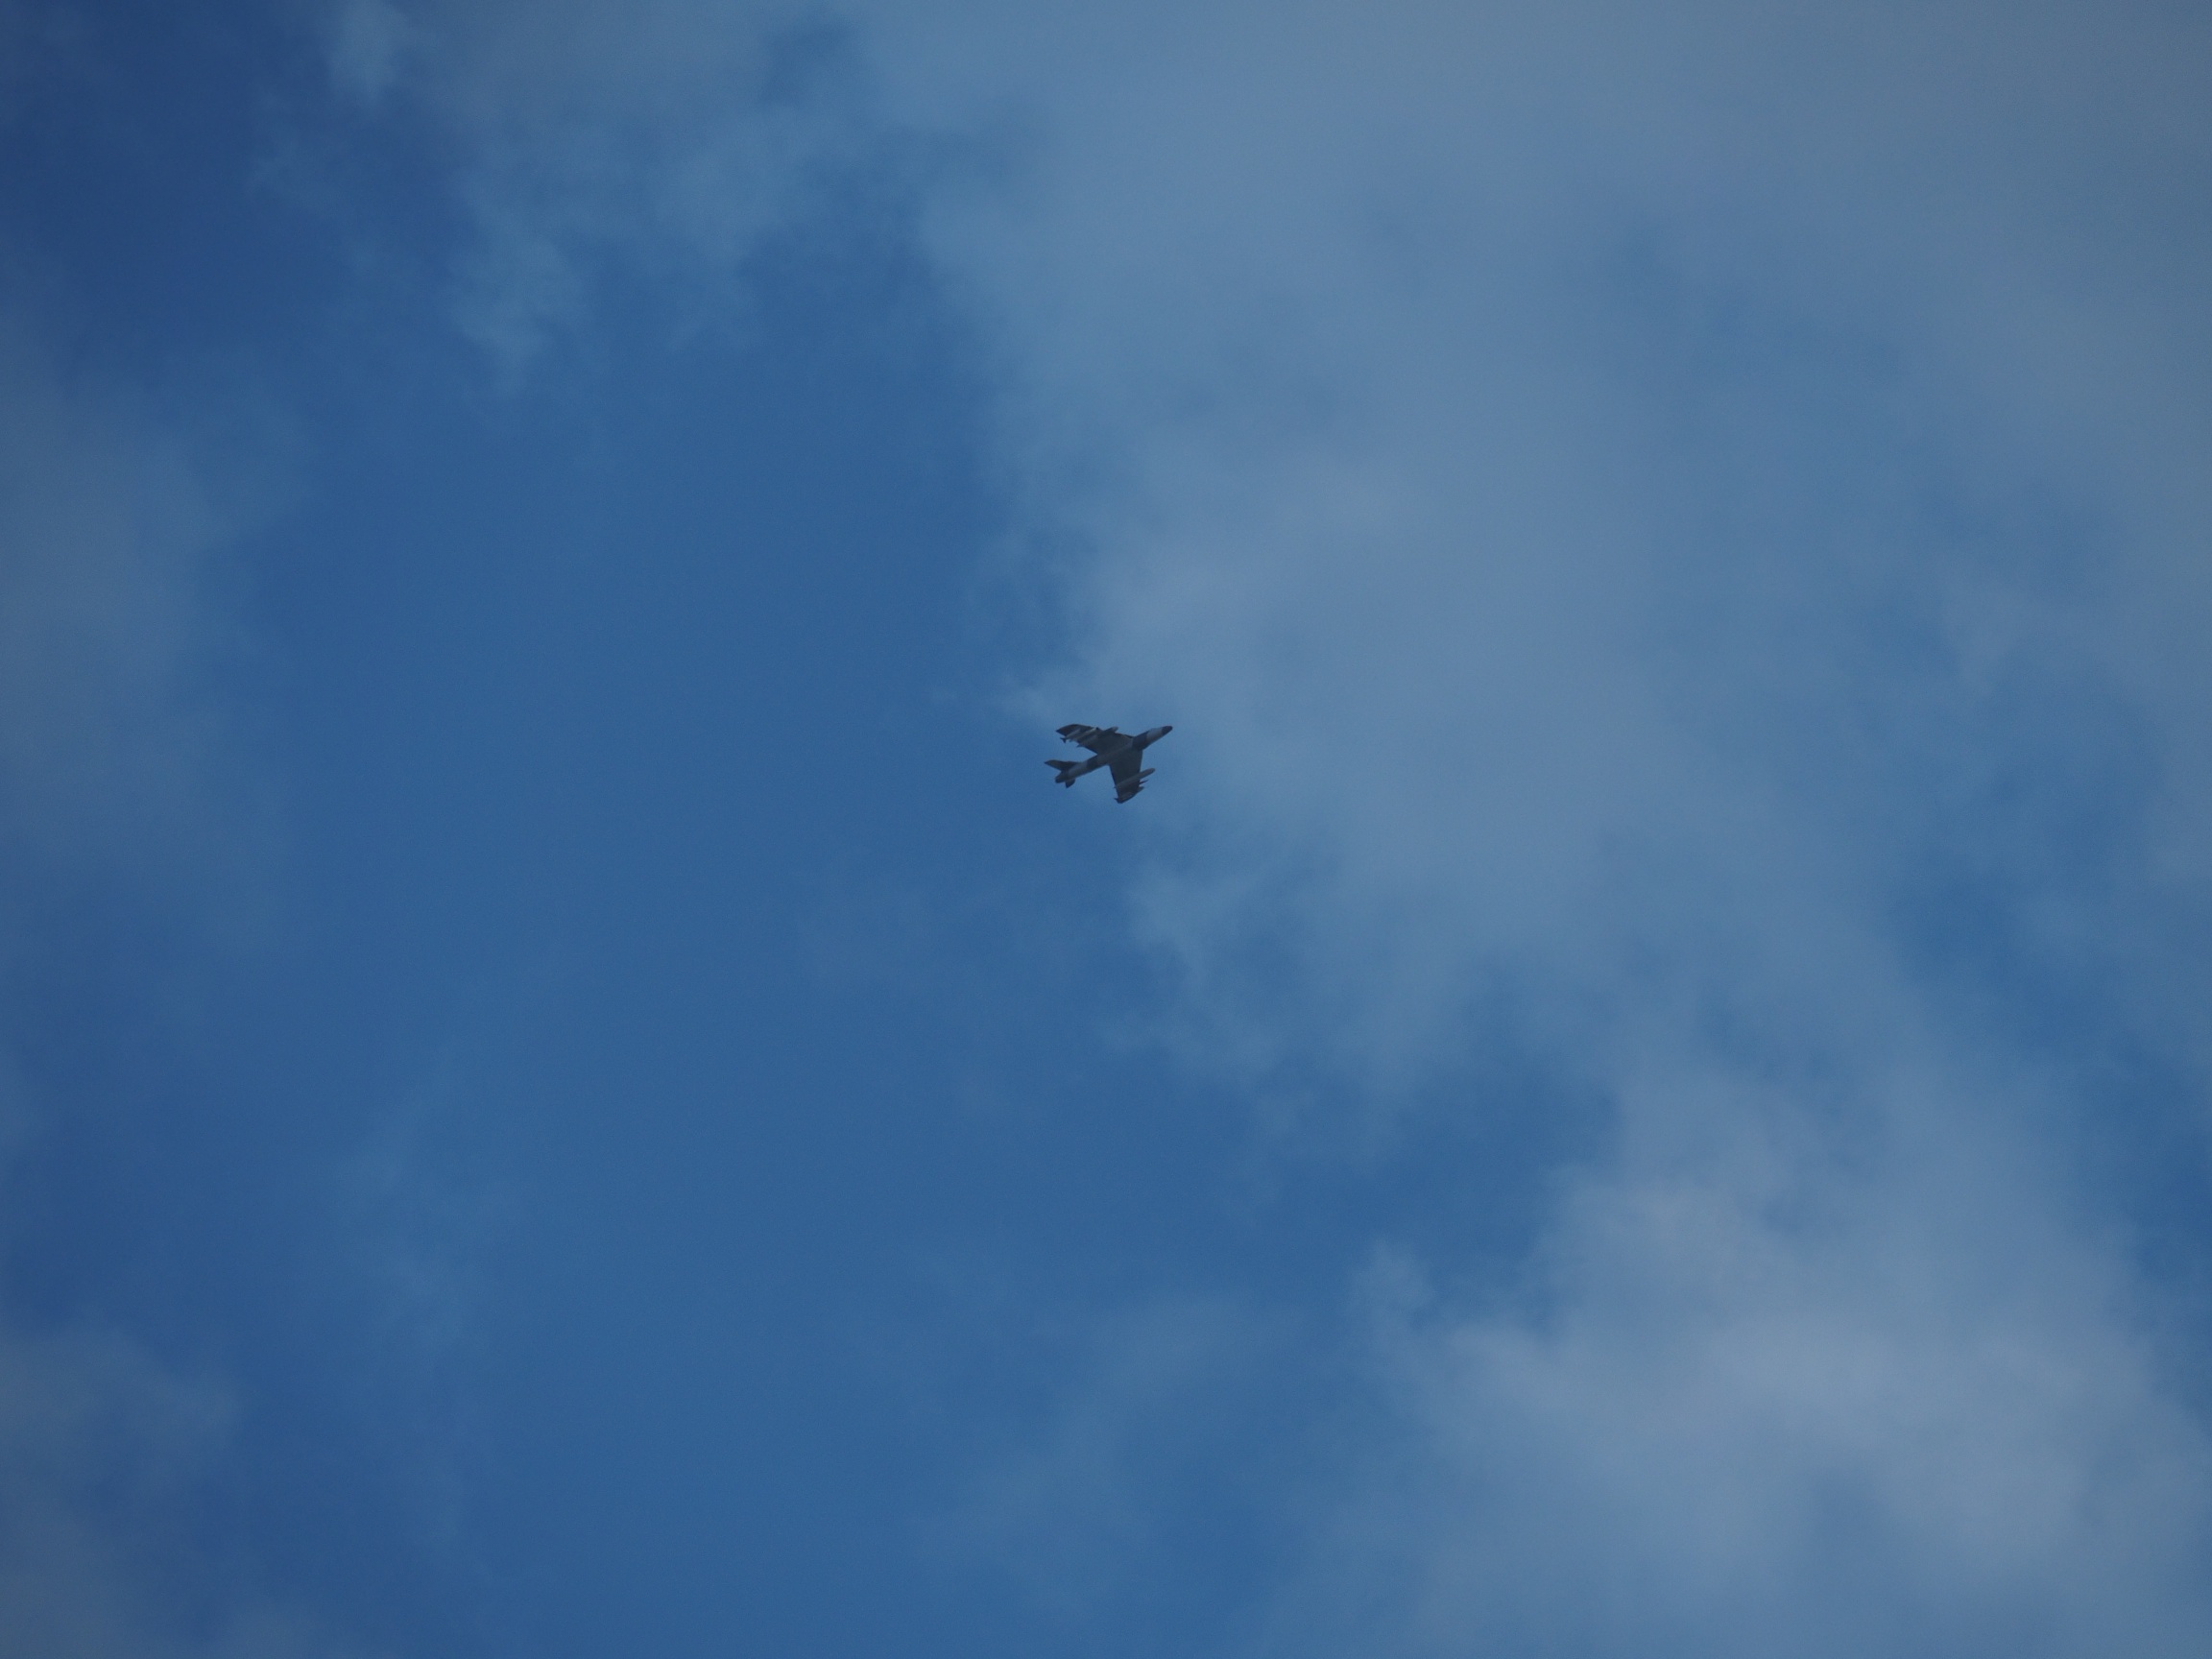 Photograph of Hawker Hunter aircraft overhead